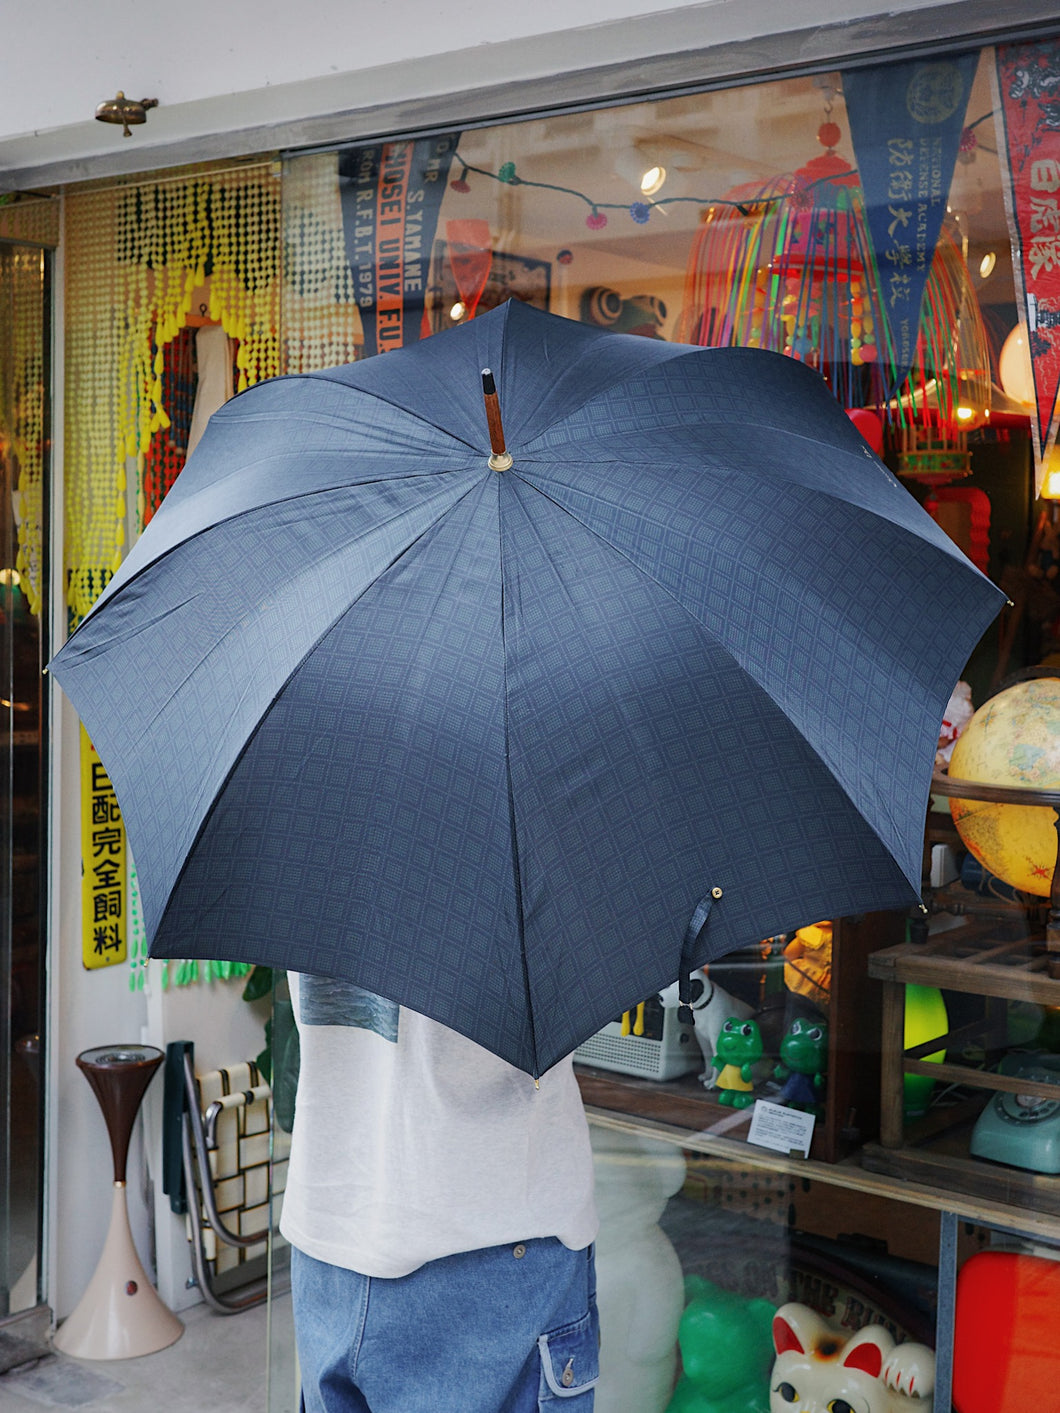 意大利製 Christian Dior 中古長傘